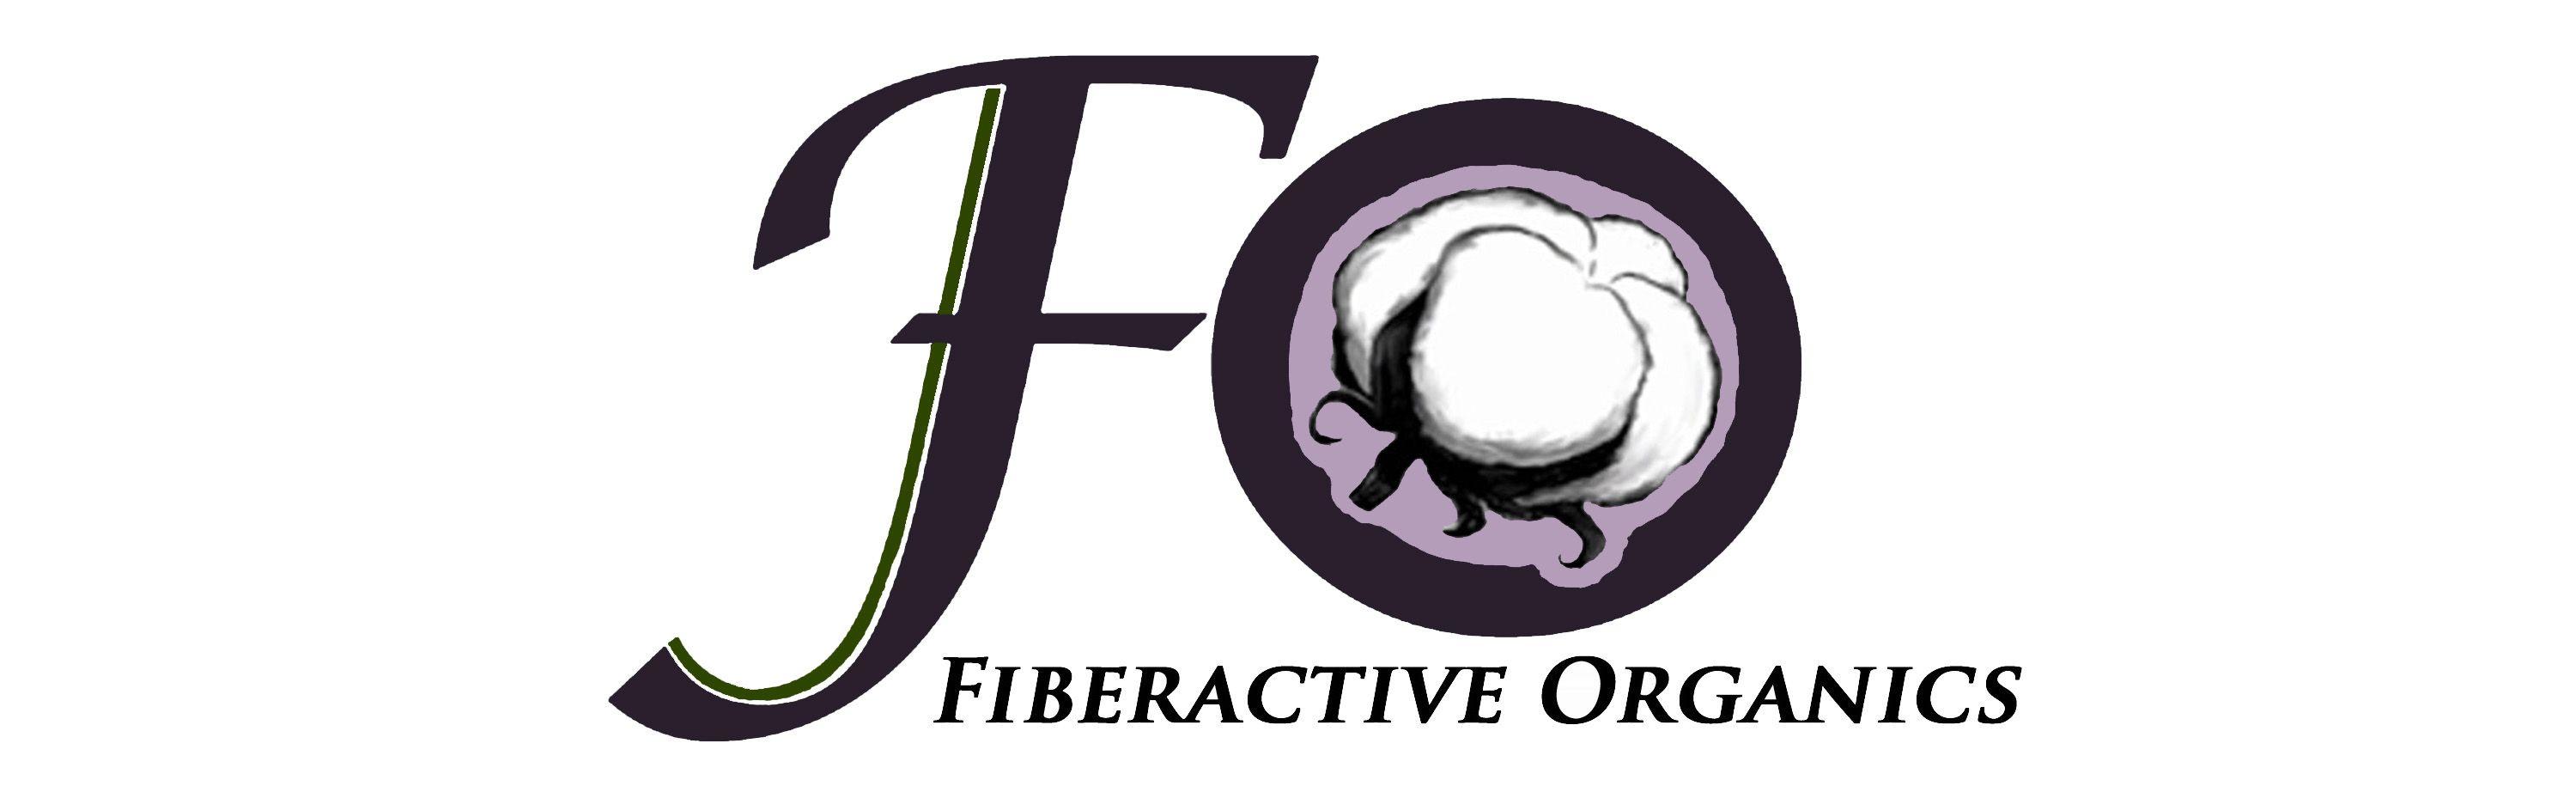 Fo Logo - Fiberactive Organics. GOTS certified organic cotton sewing thread